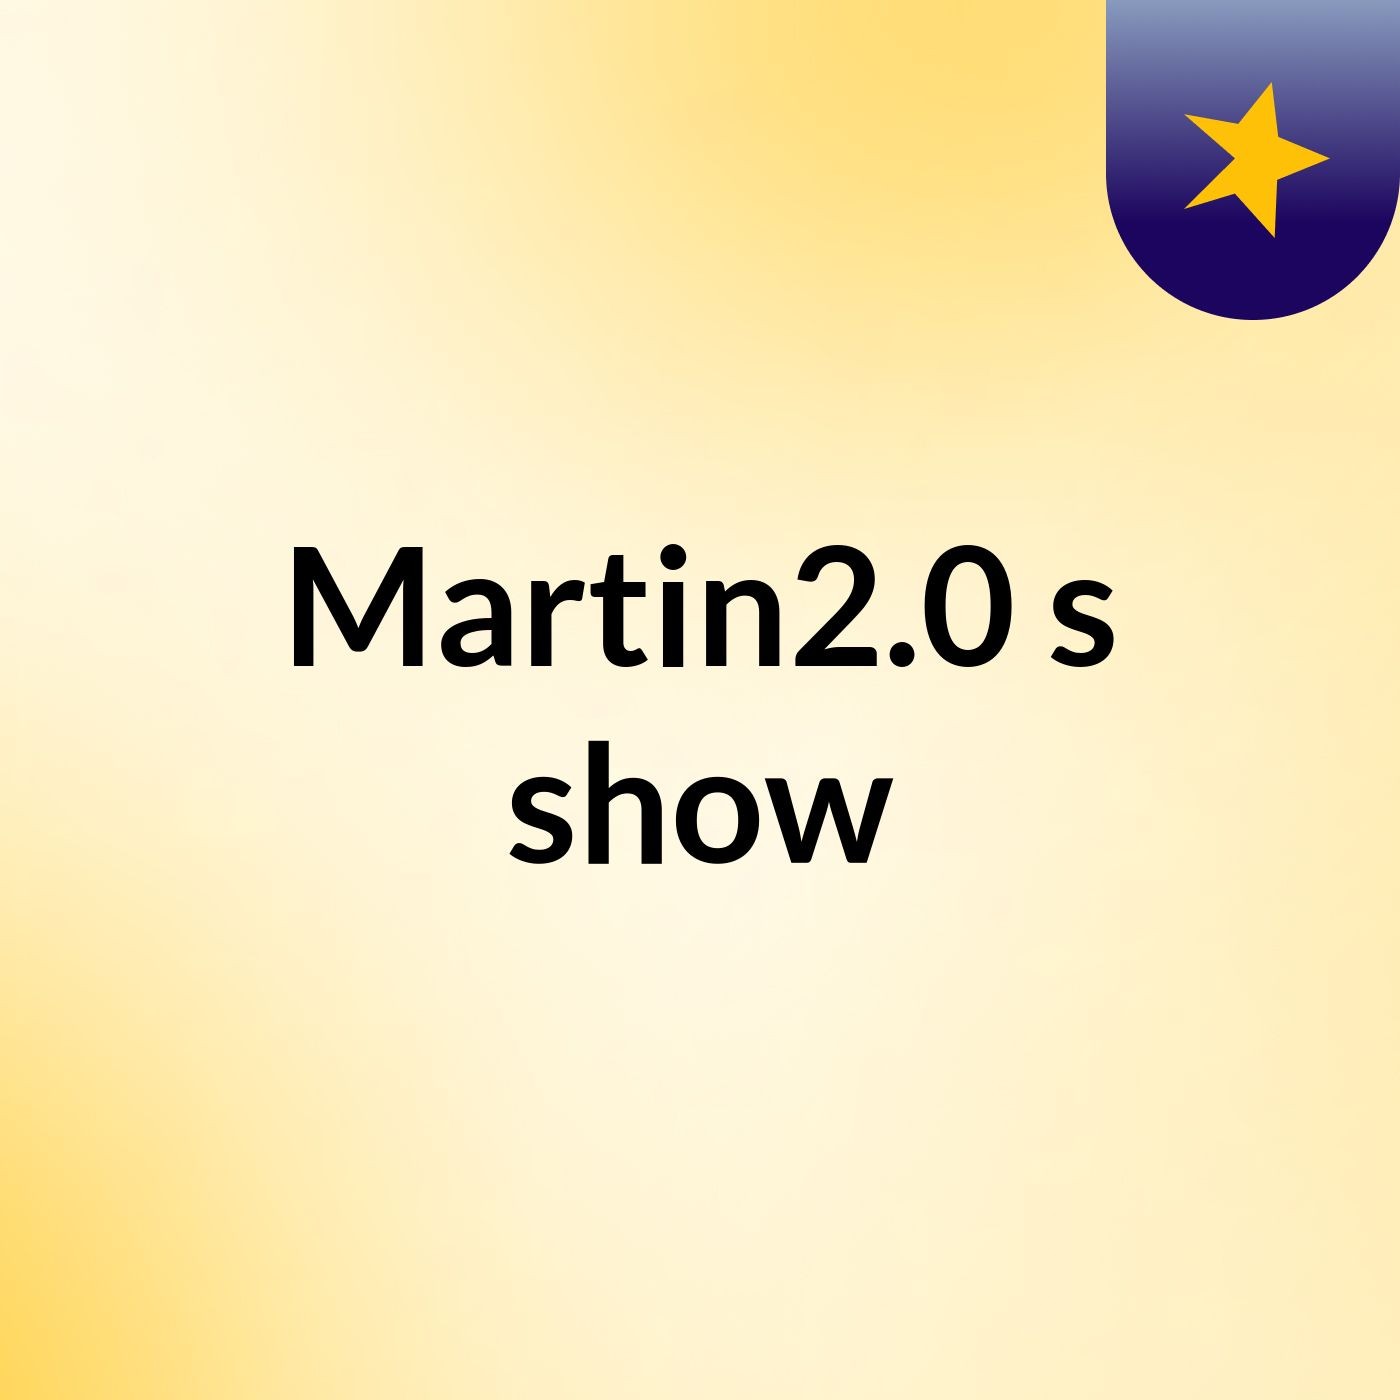 Martin2.0's show